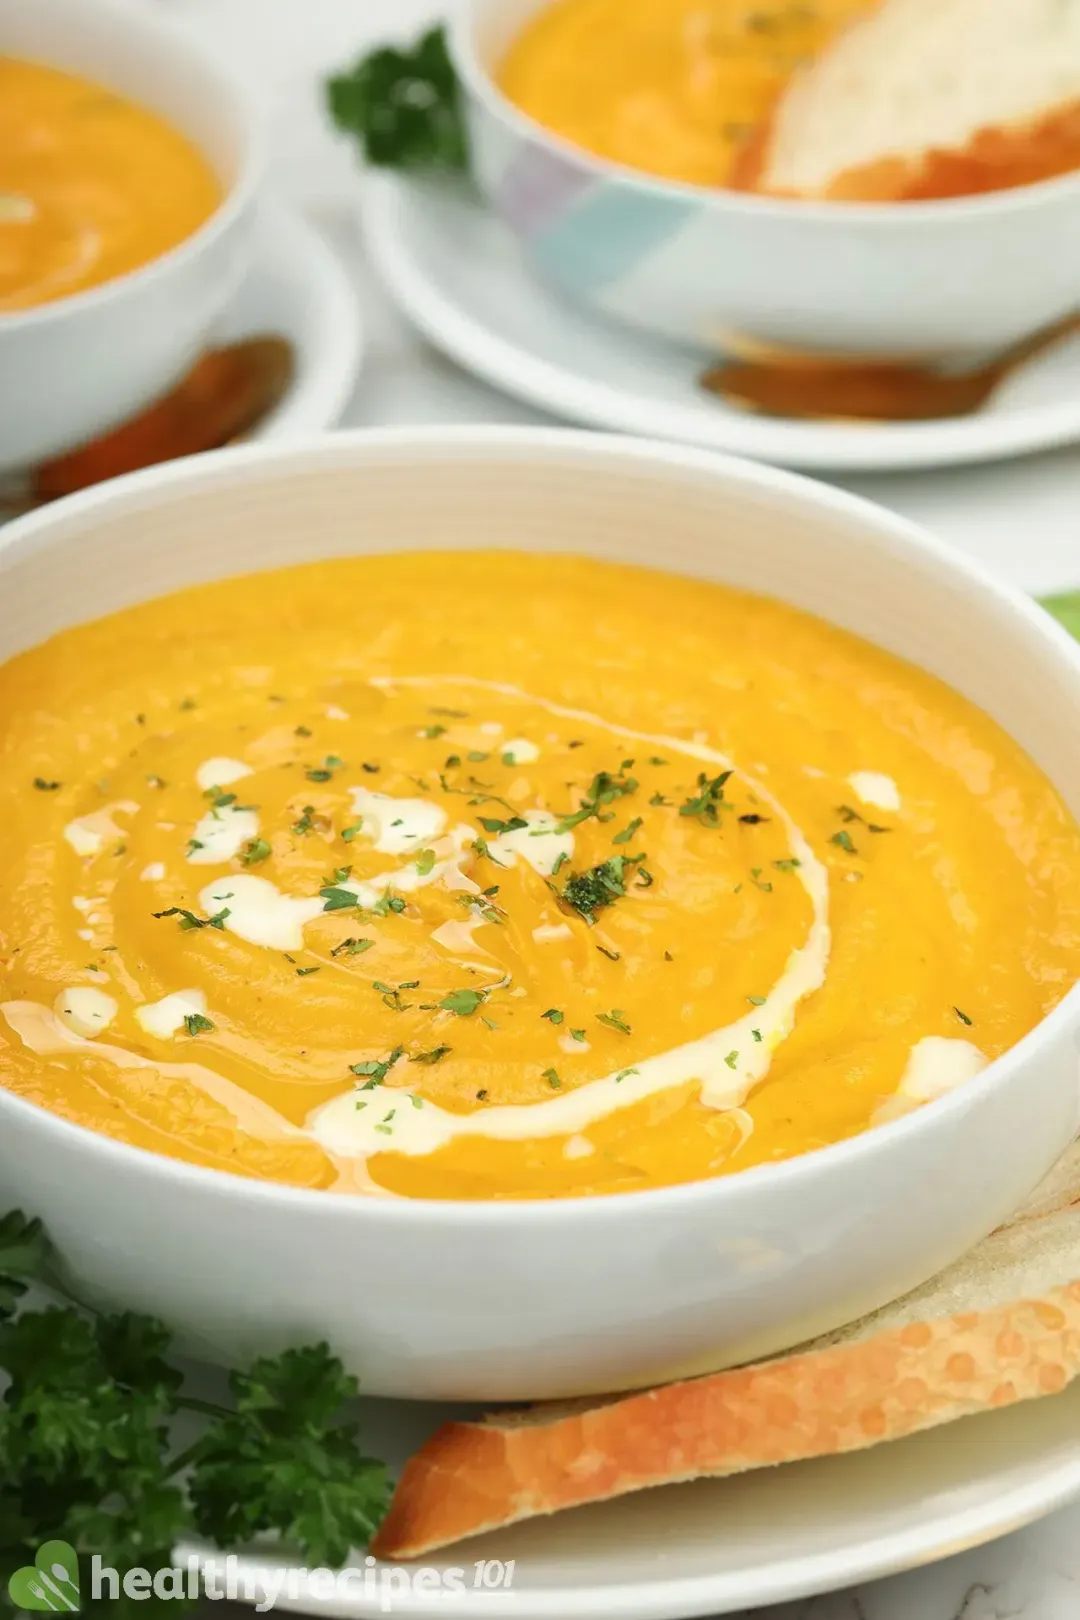 Carrot Soups Benefits